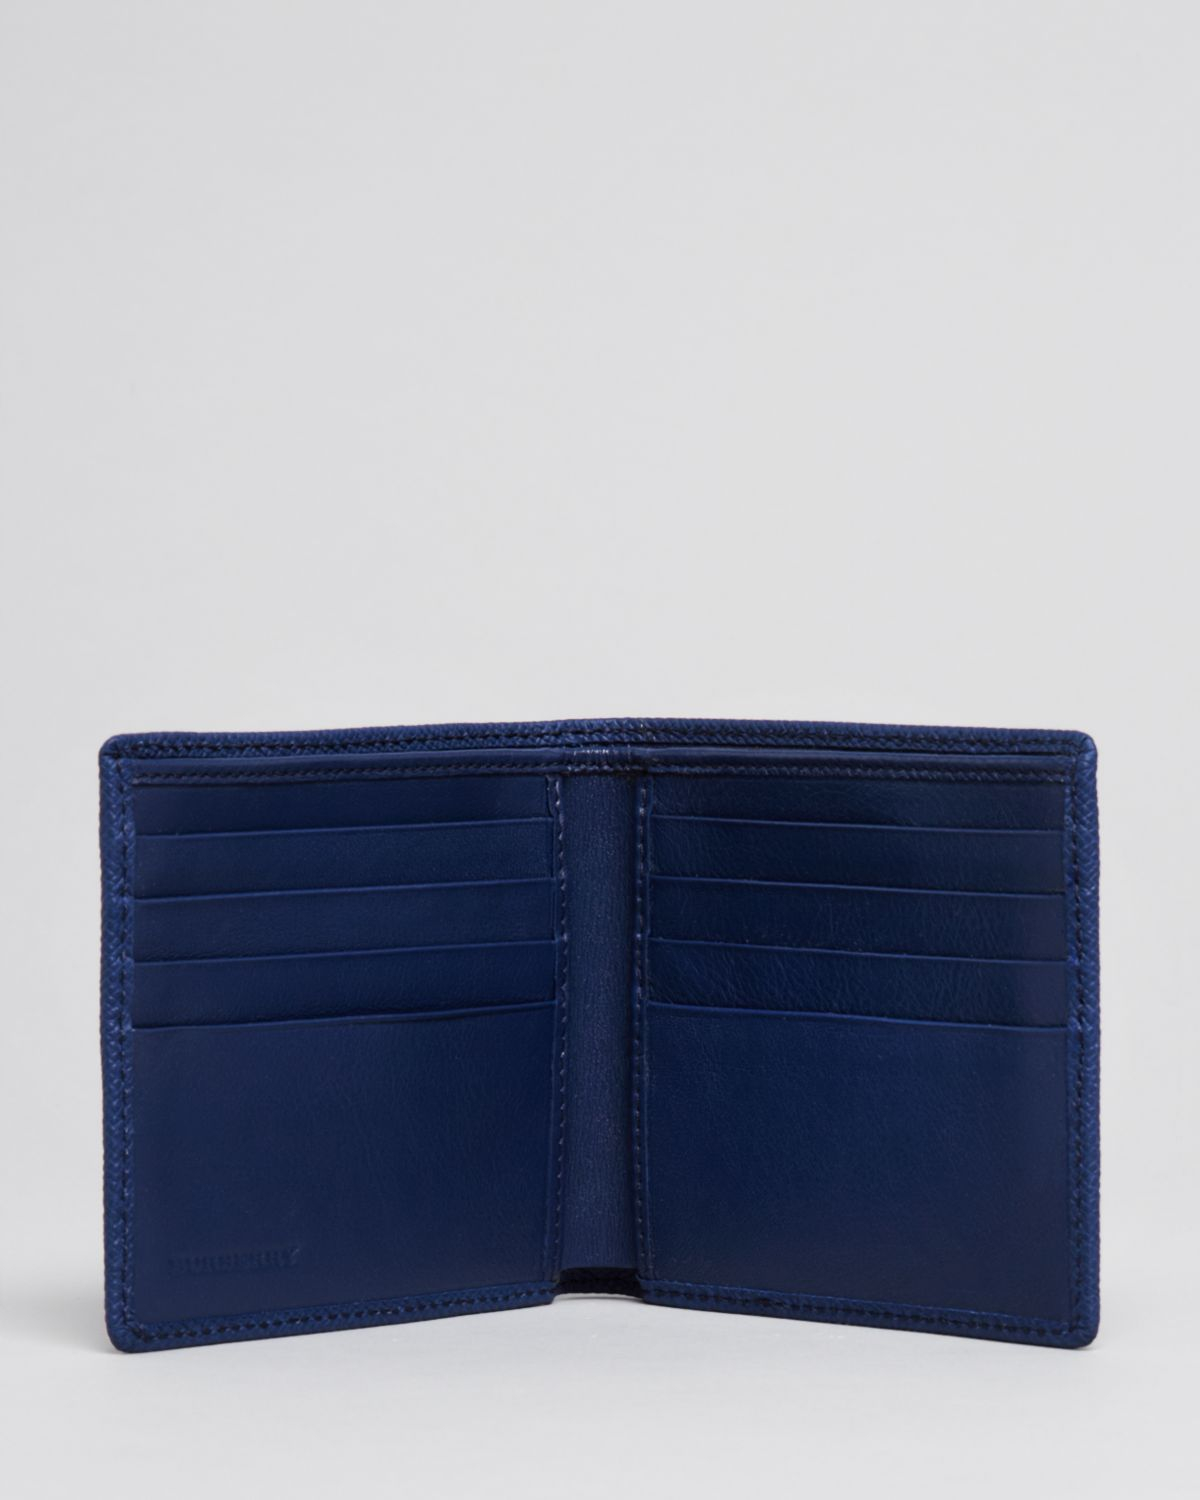 Burberry London Studded Bifold Wallet in Blue for Men - Lyst